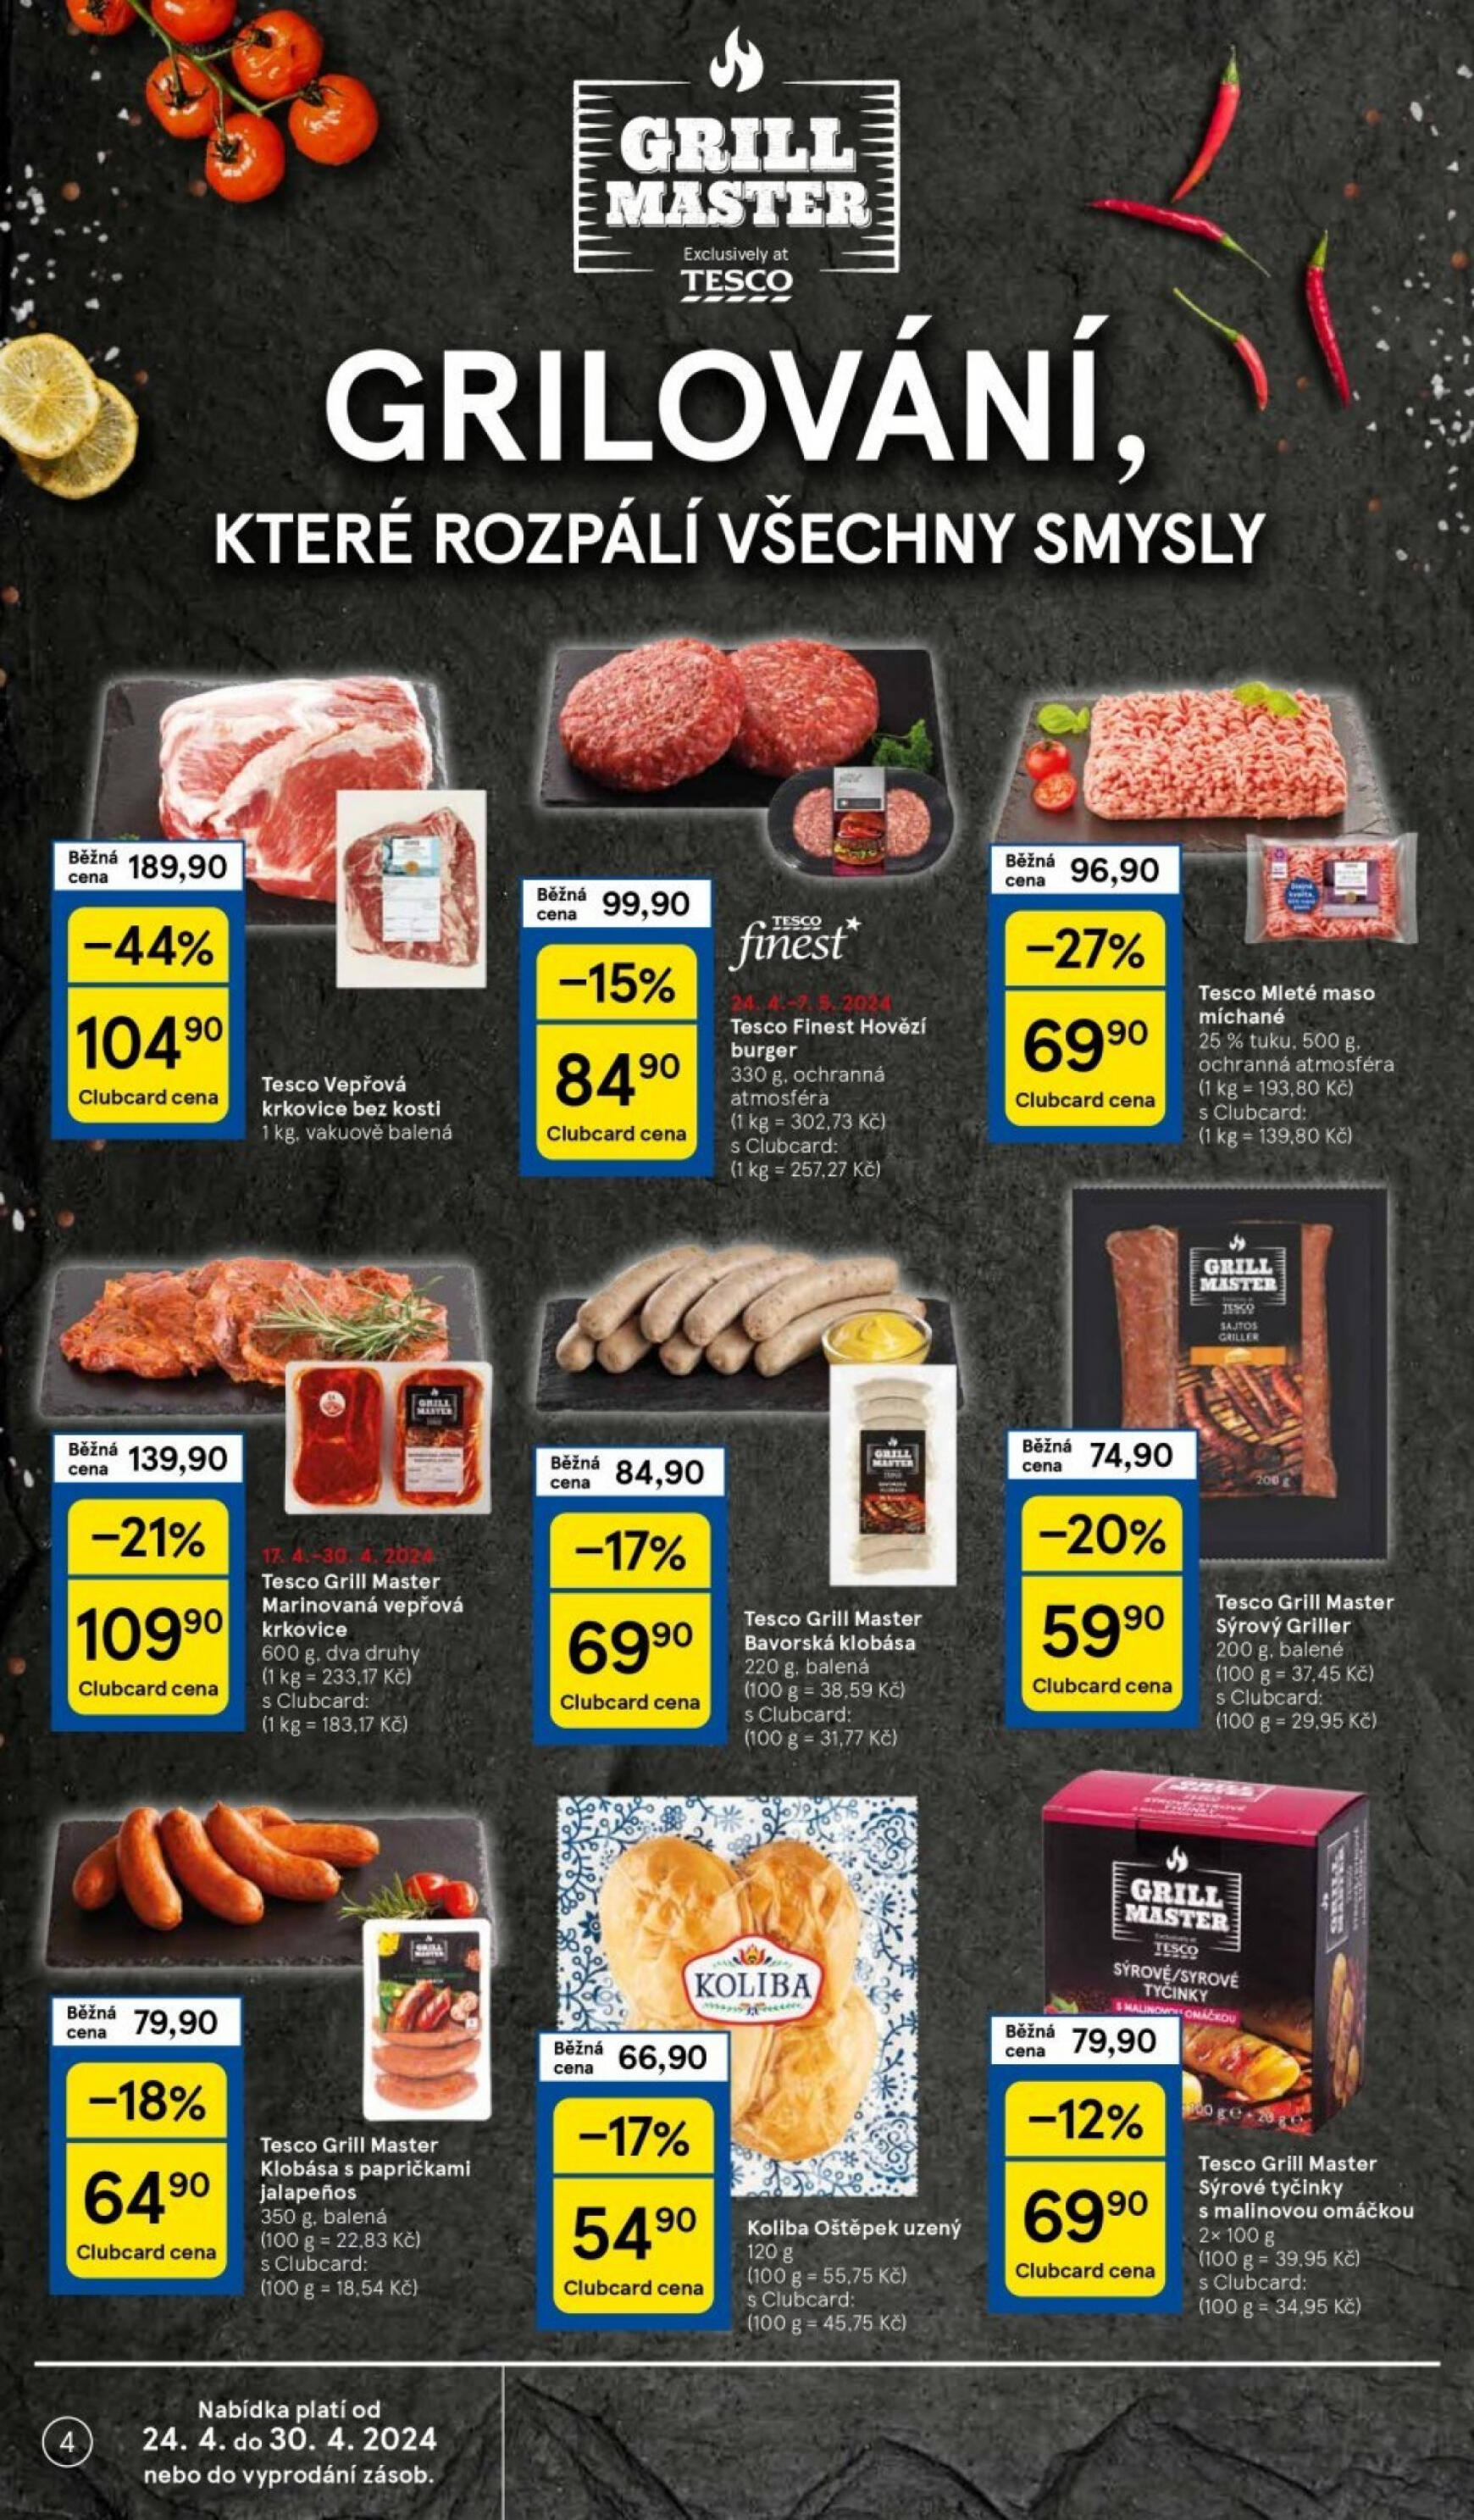 tesco - Leták Tesco supermarket aktuální 24.04. - 30.04. - page: 4